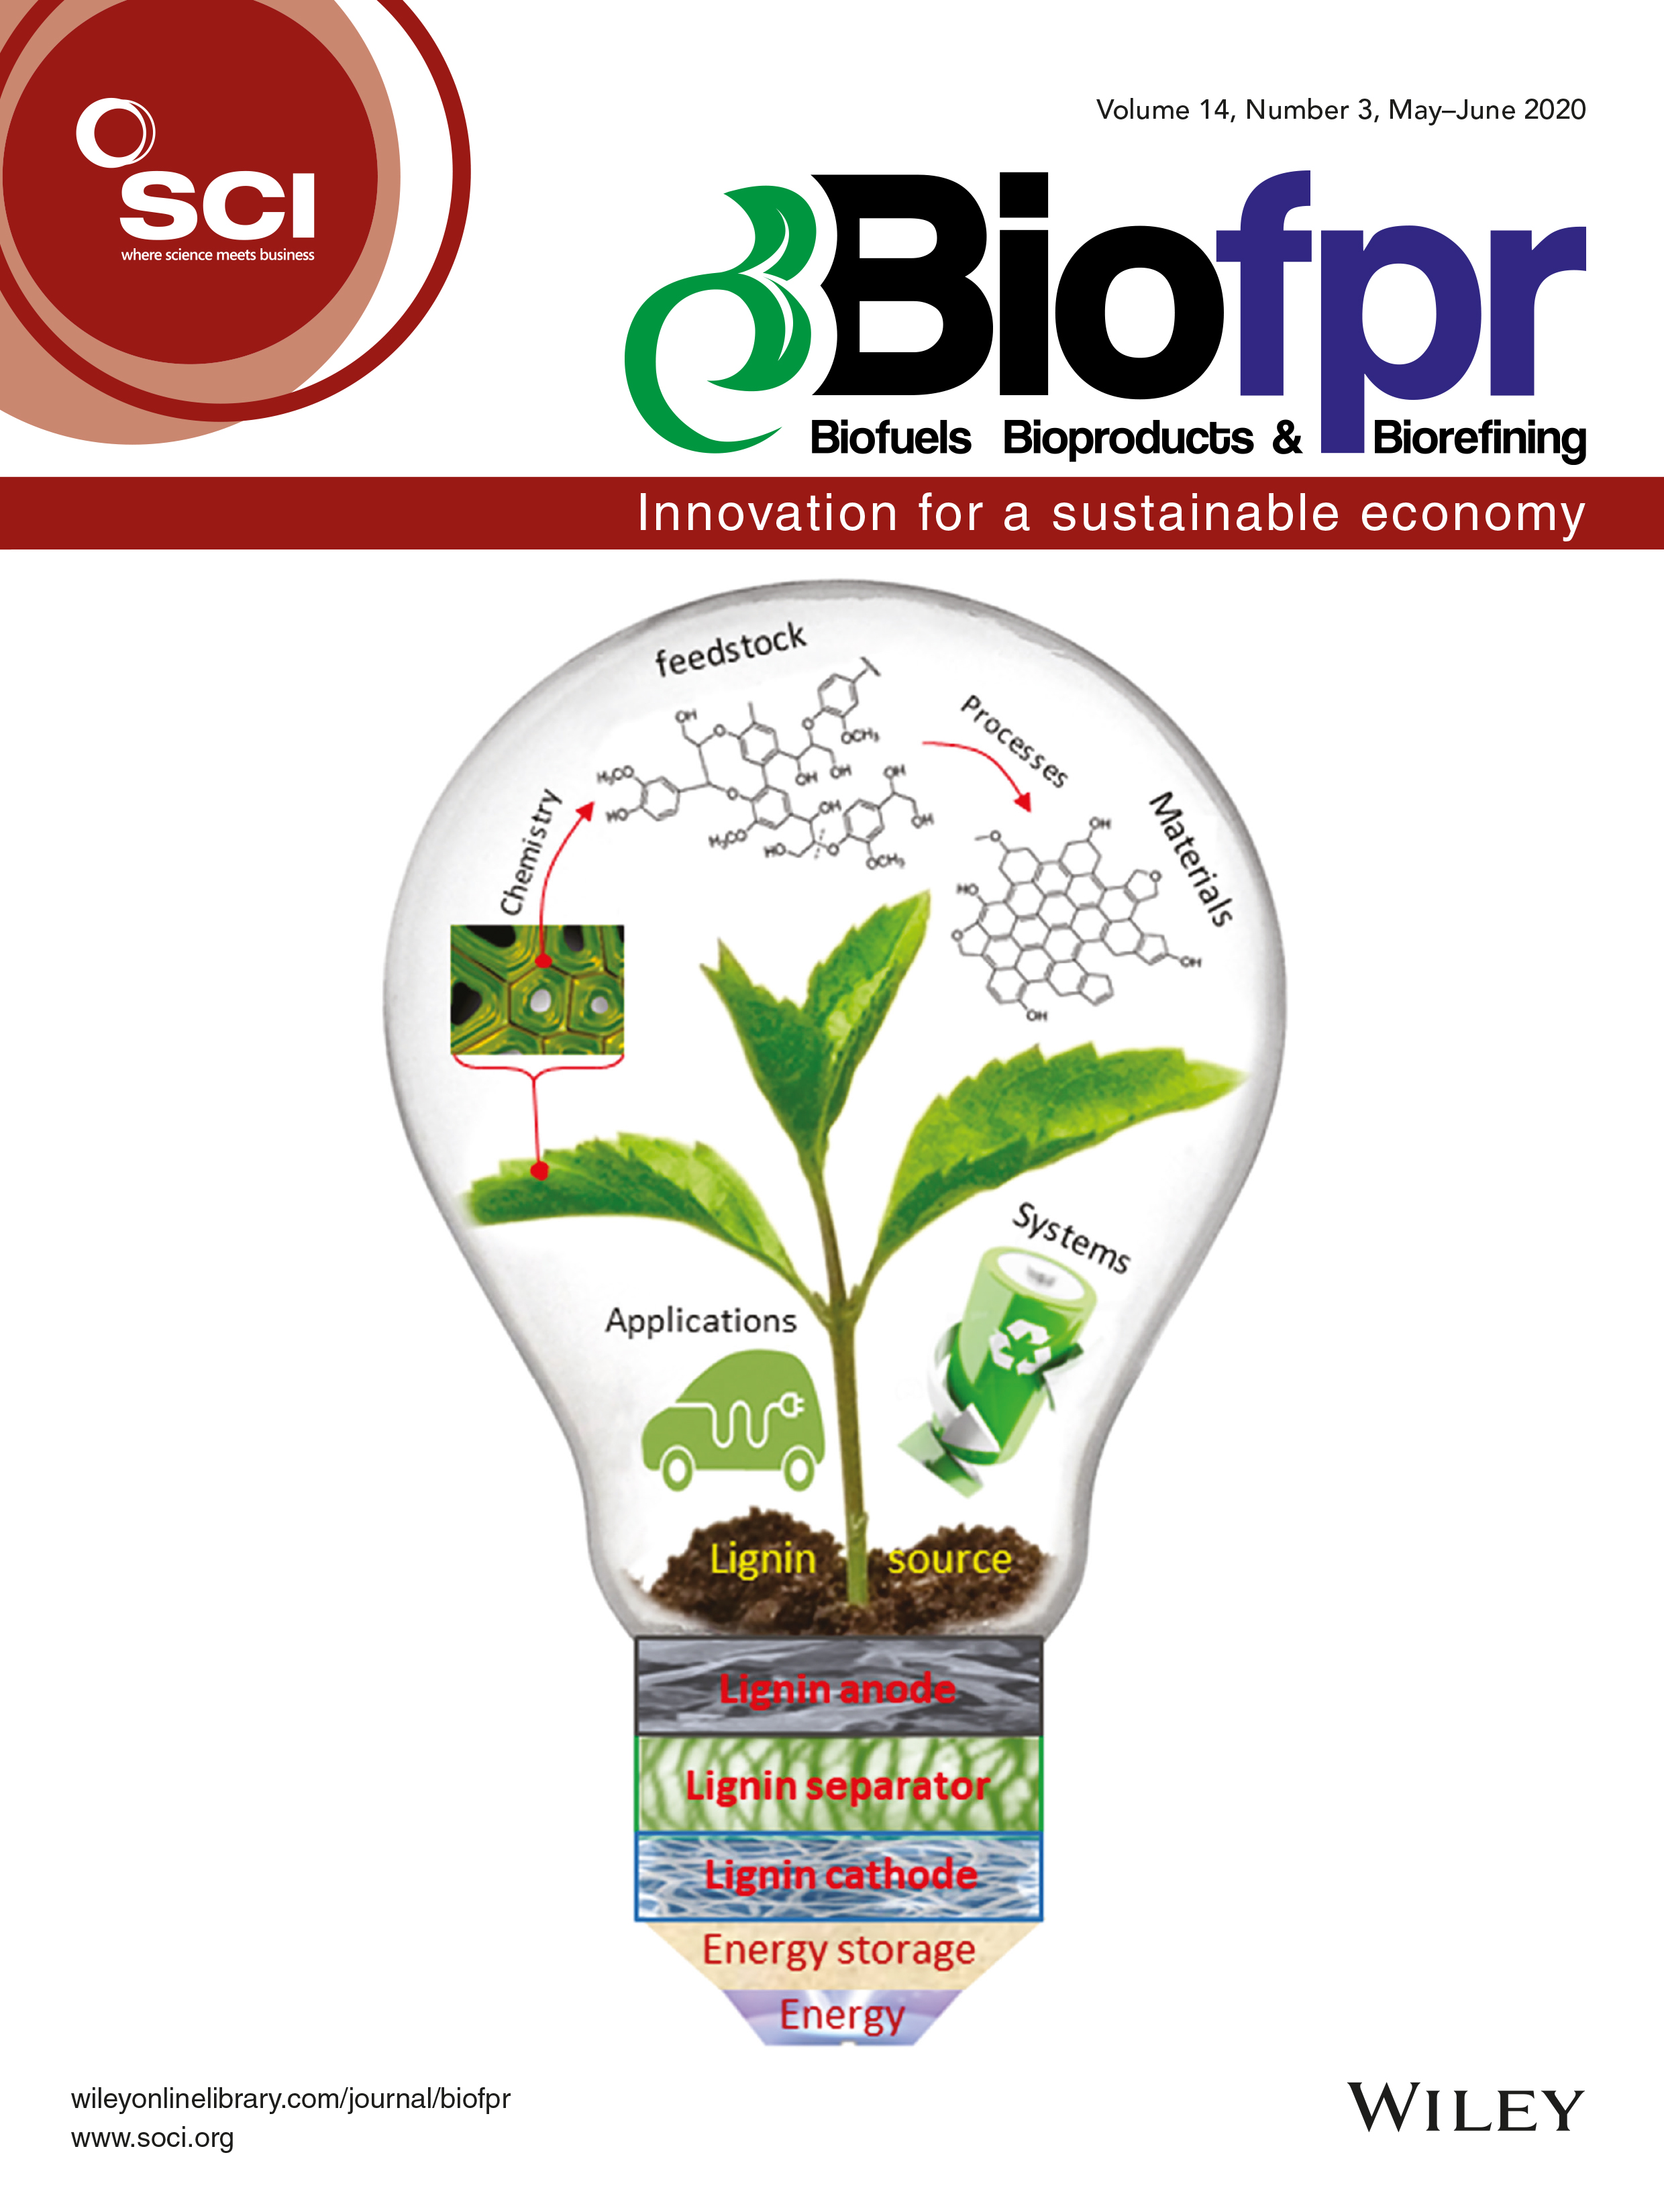 Biofuels, Bioproducts and Biorefining